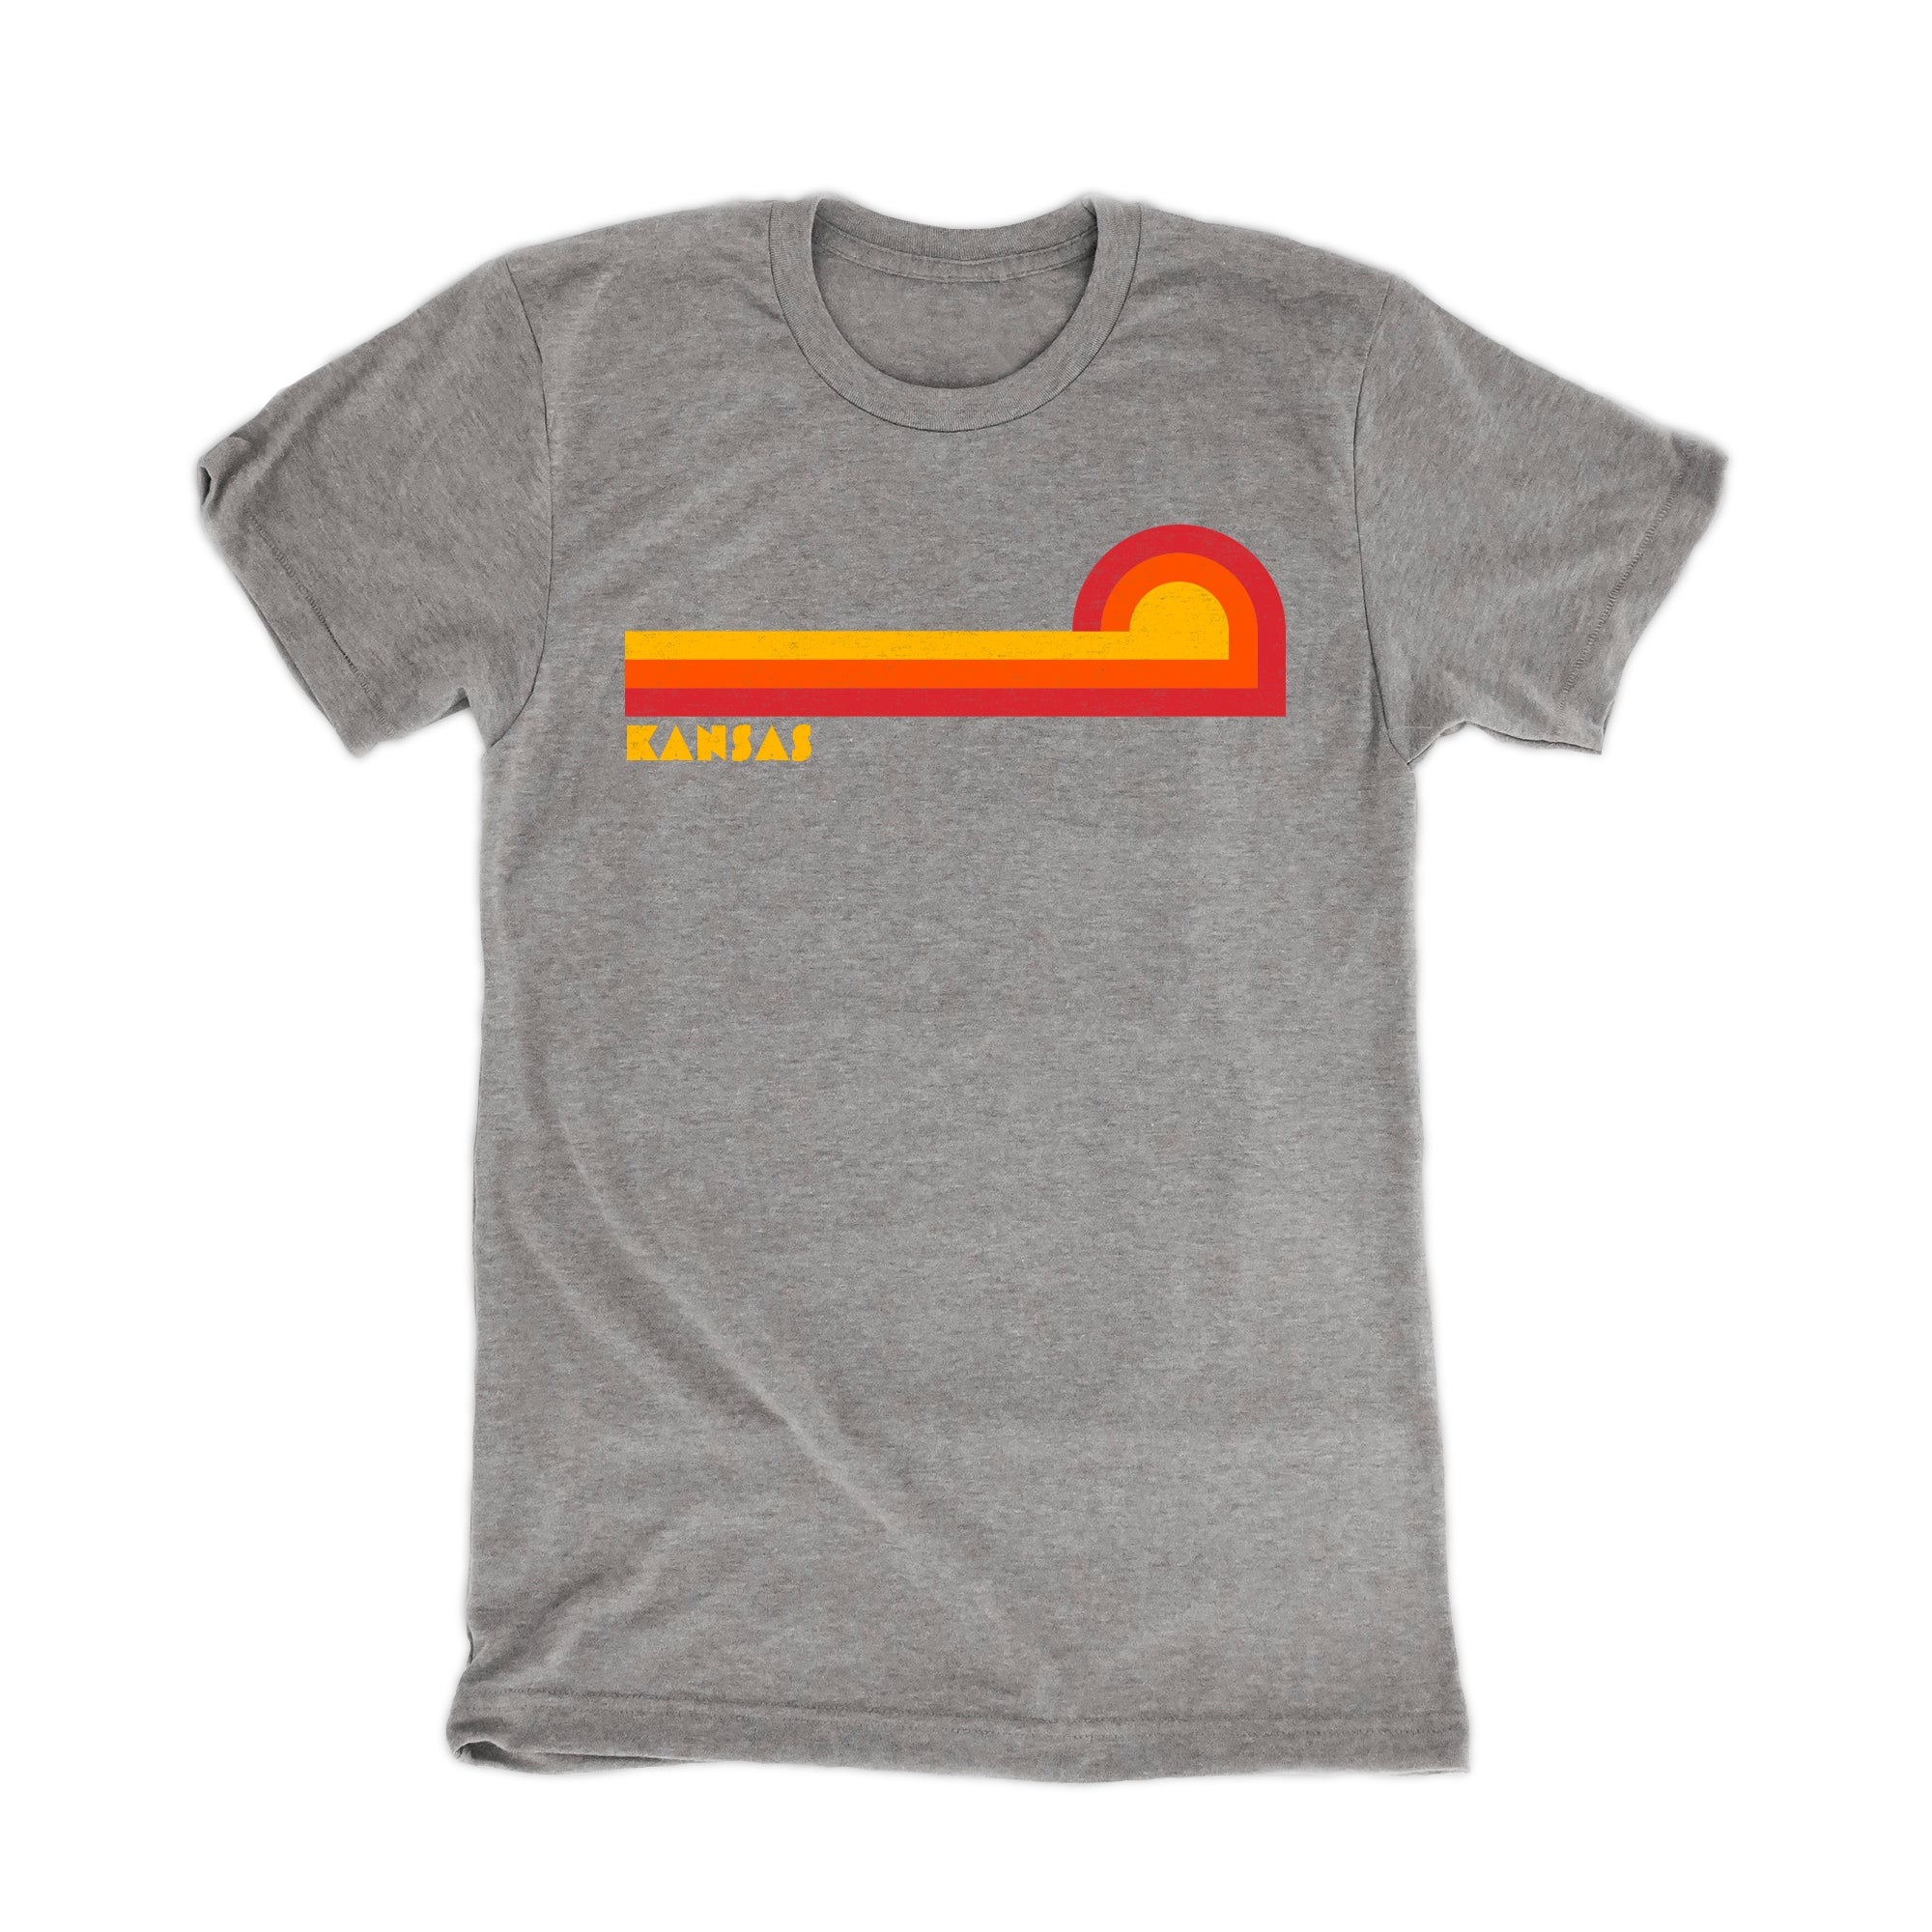 Kansas Sunset Gray T-Shirt